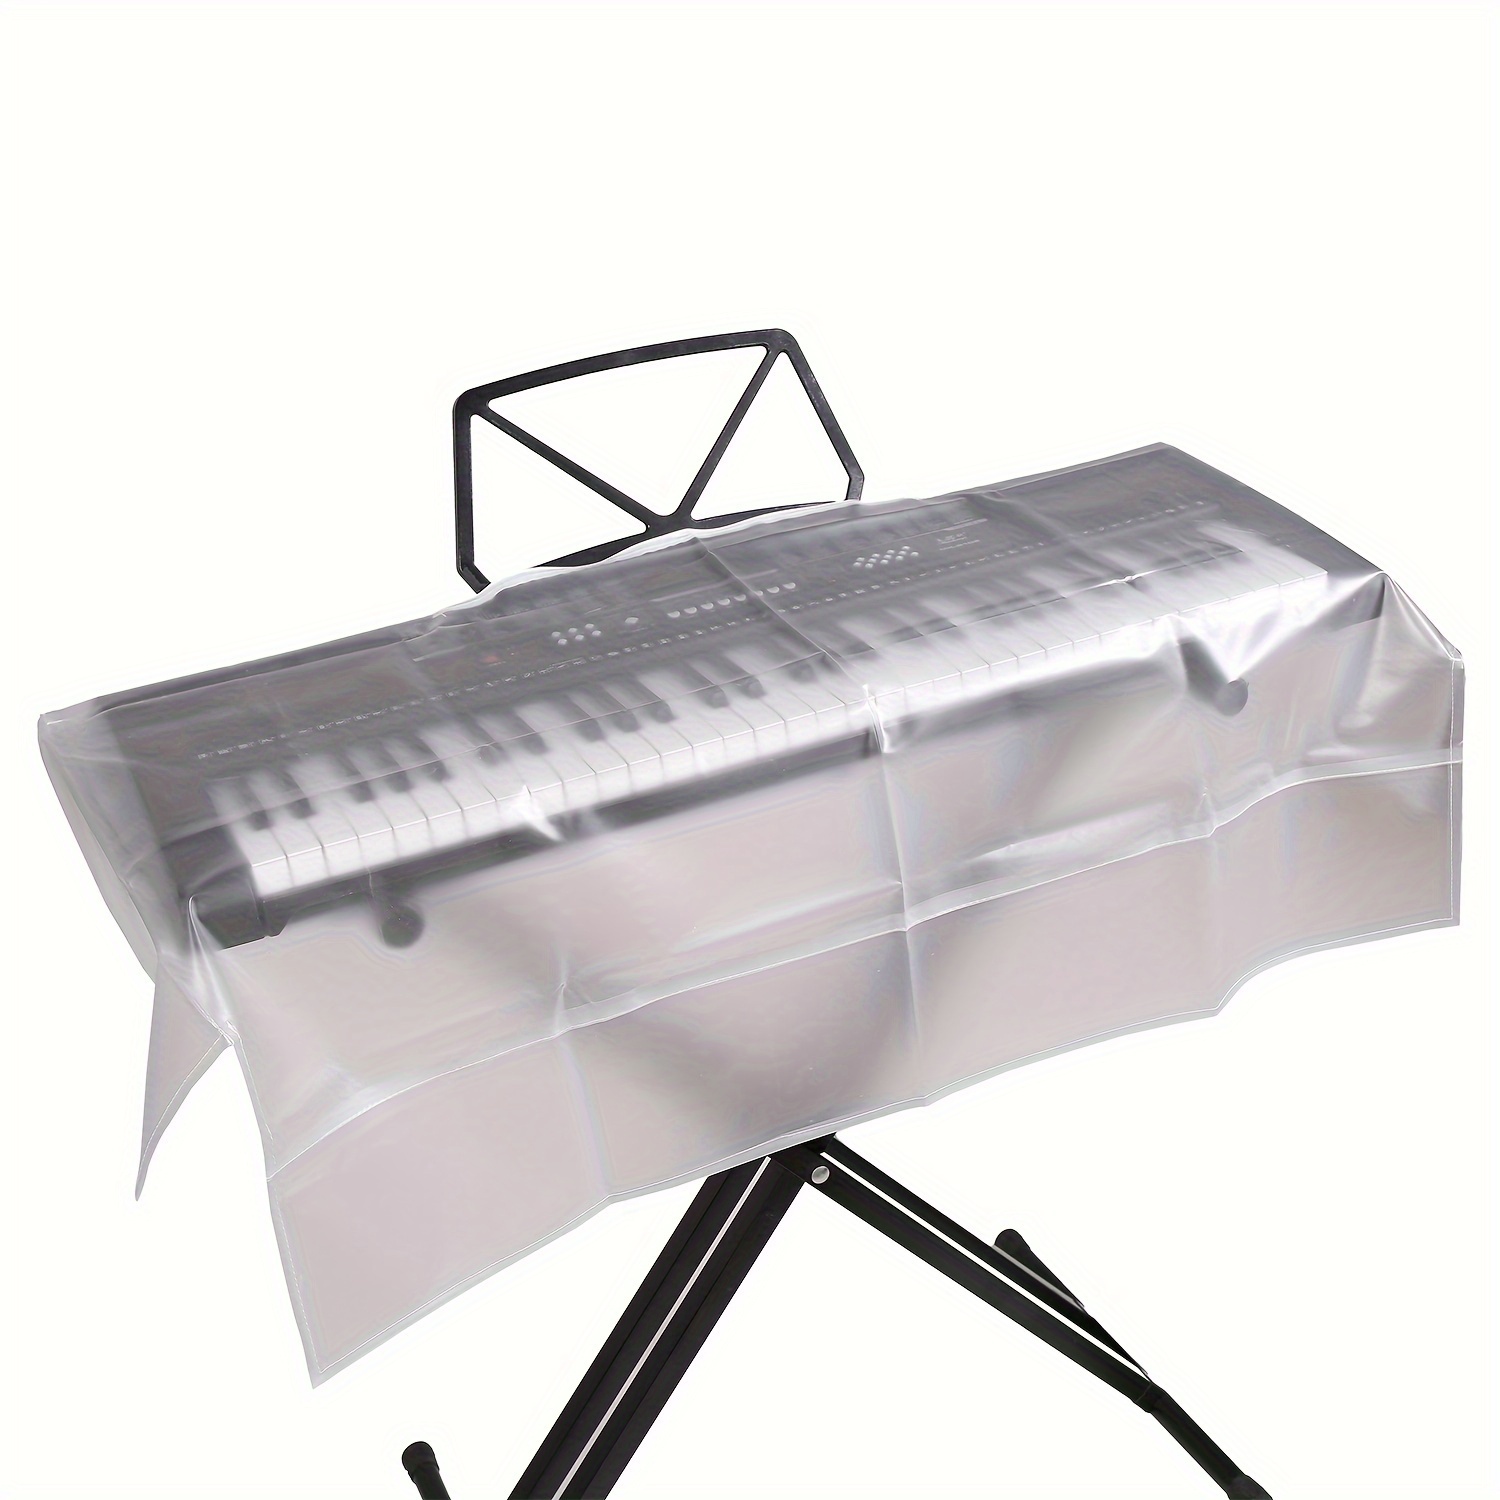 Electronic Piano Cover Dustproof Waterproof Keyboard Cover - Temu